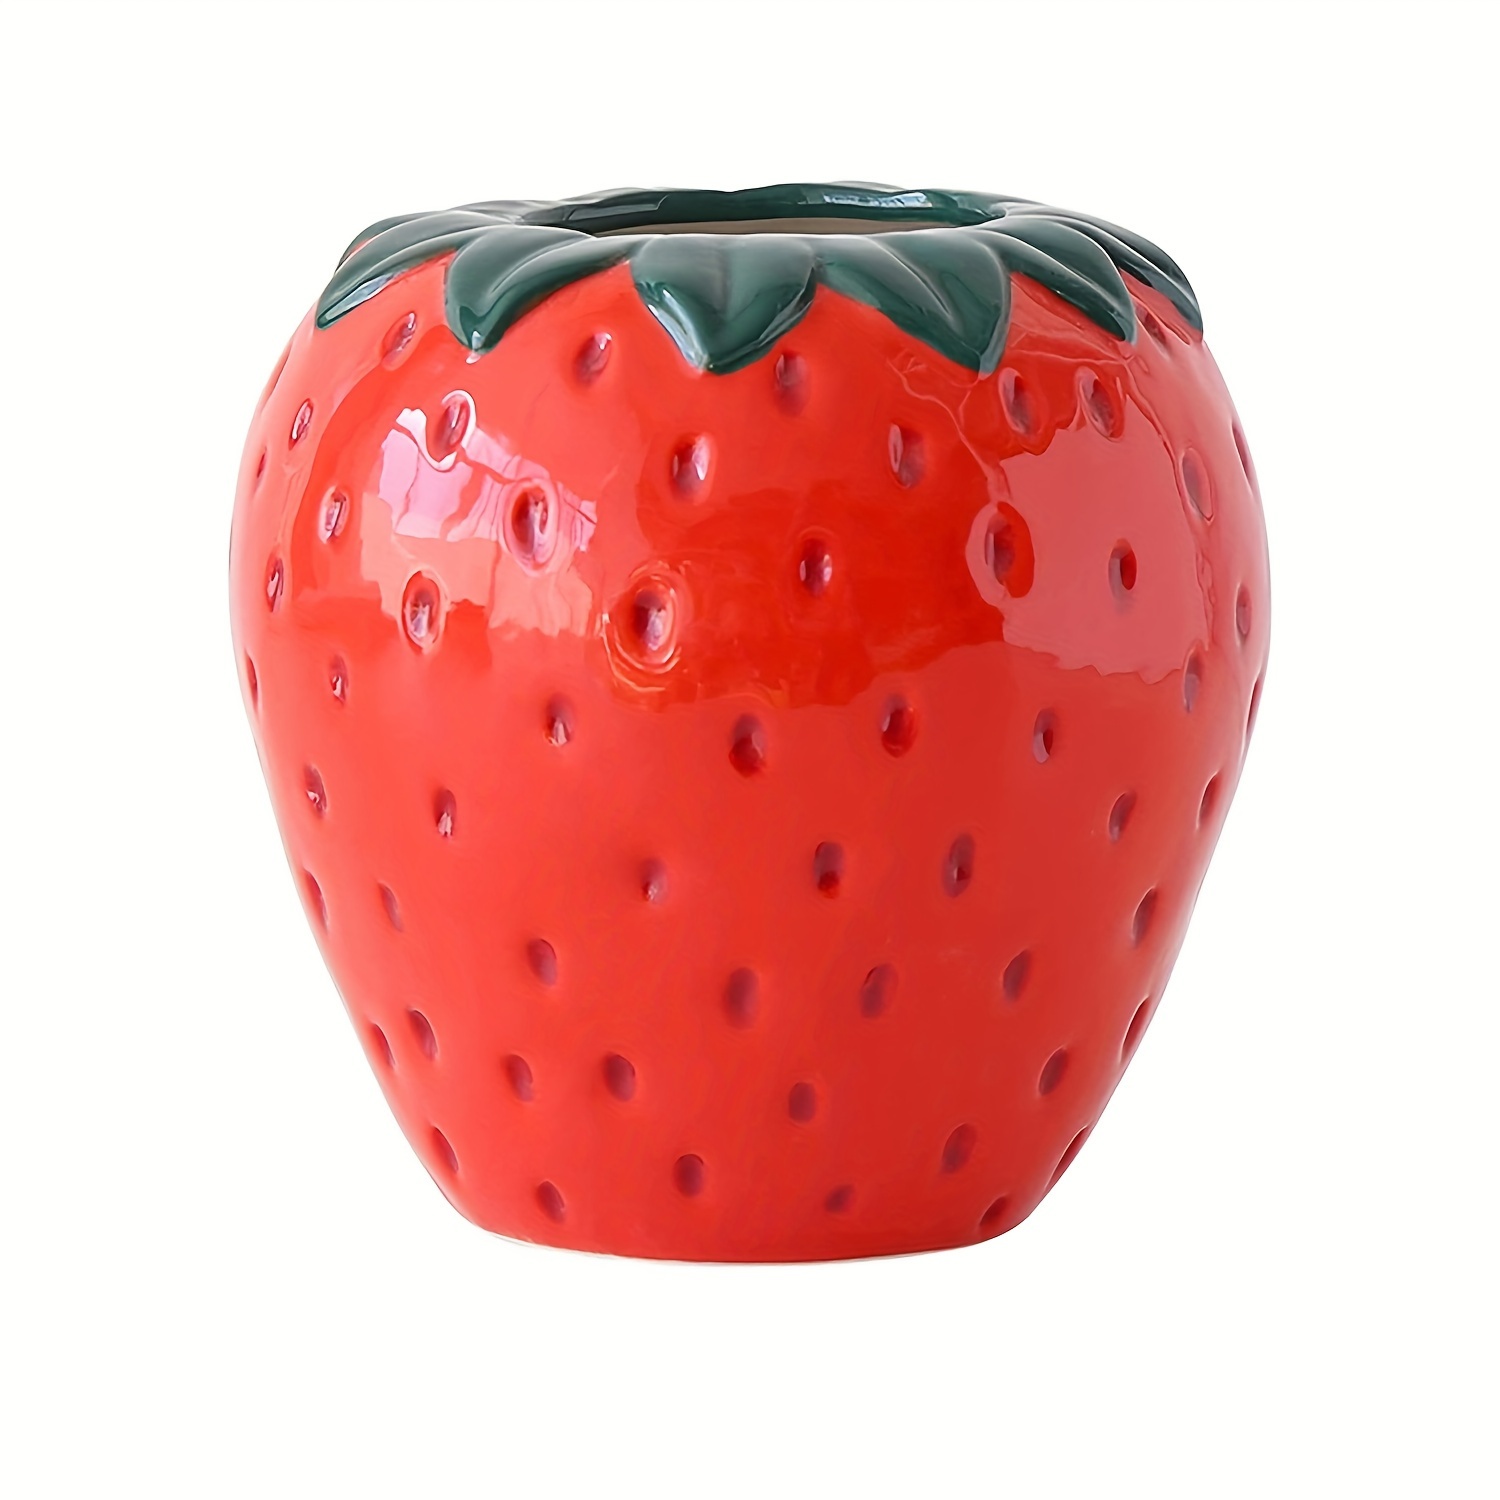 

1pc Vintage Inspired Strawberry Vase, Decorative Ceramic Vase, Large Flower Vase, Unique Strawberry Decor For Home/kitchen/office